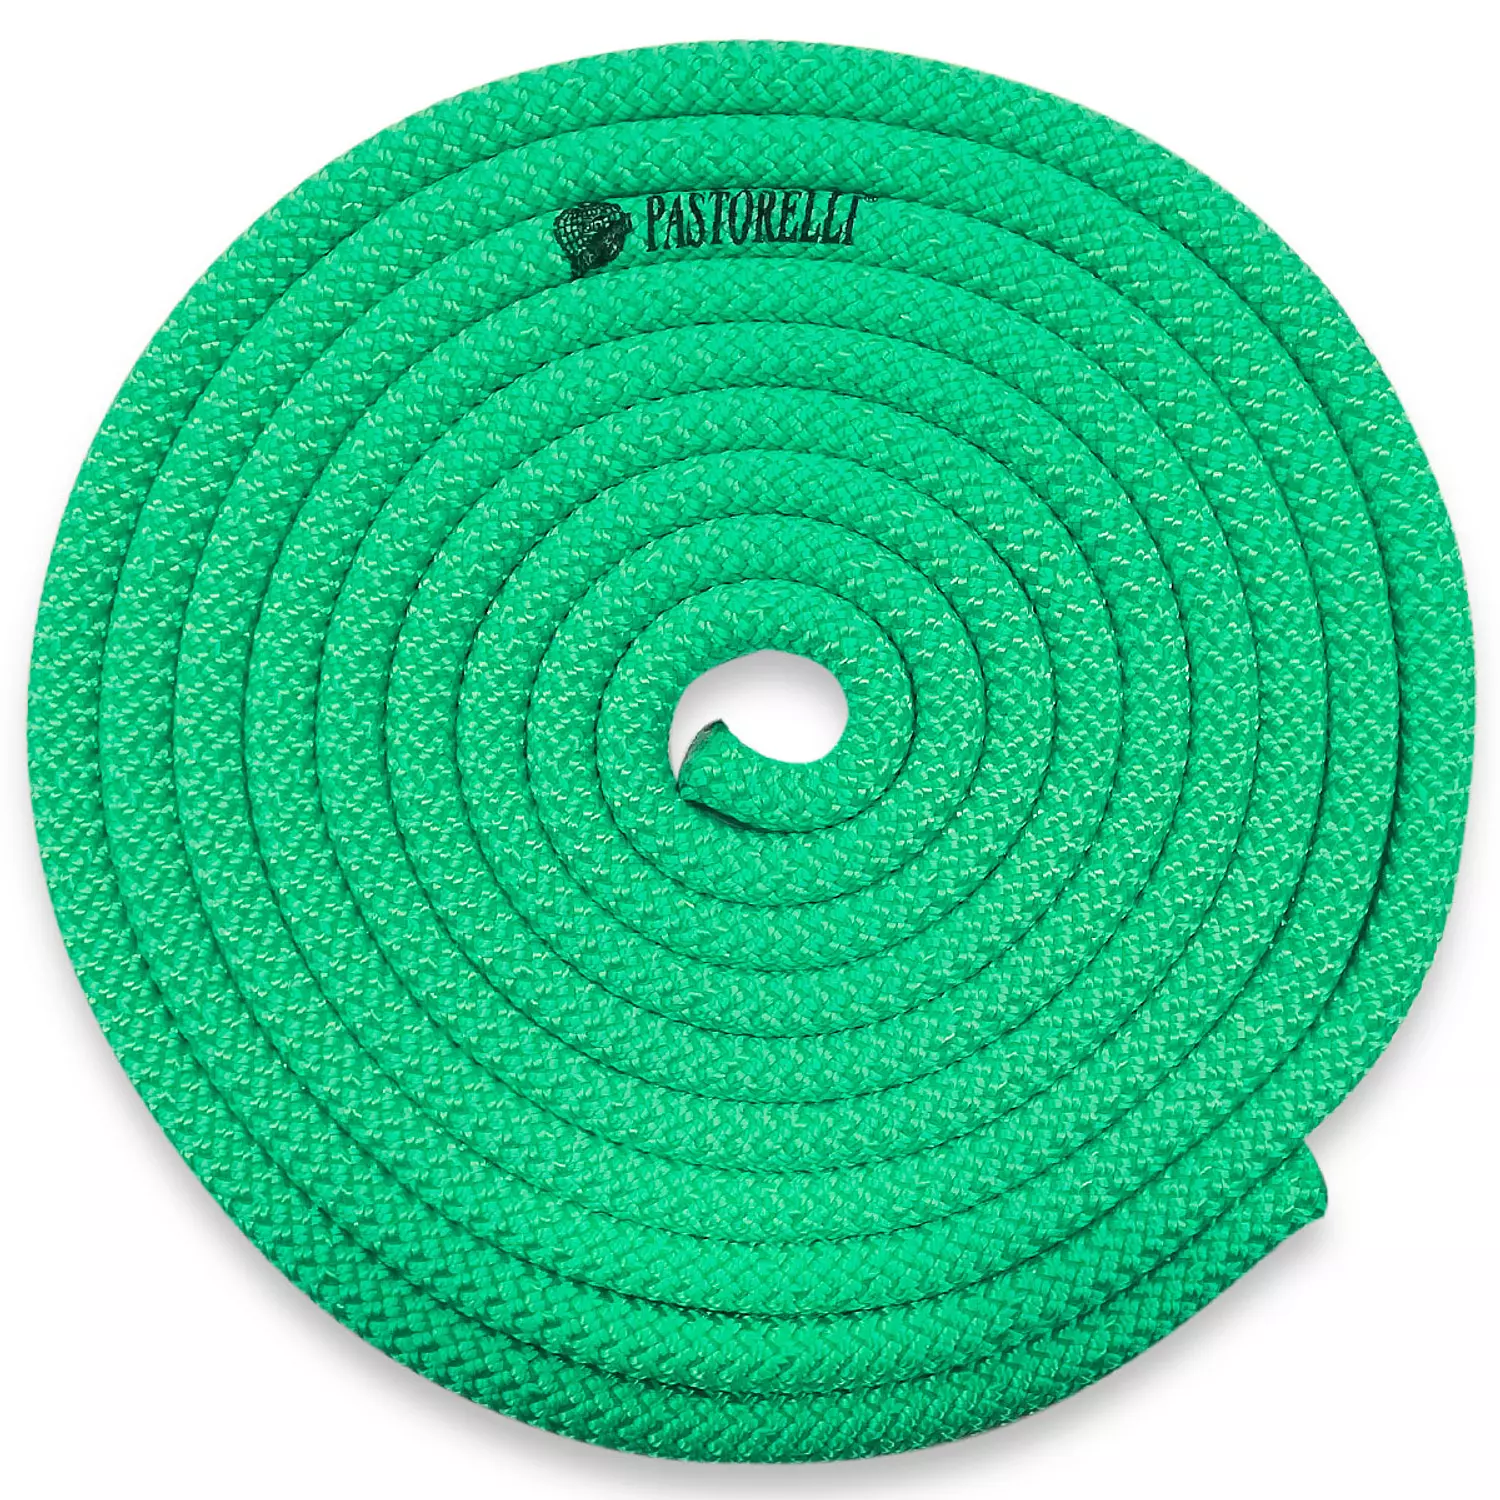 Pastorelli-New Orleans monochromatic rope FIG 3m 4